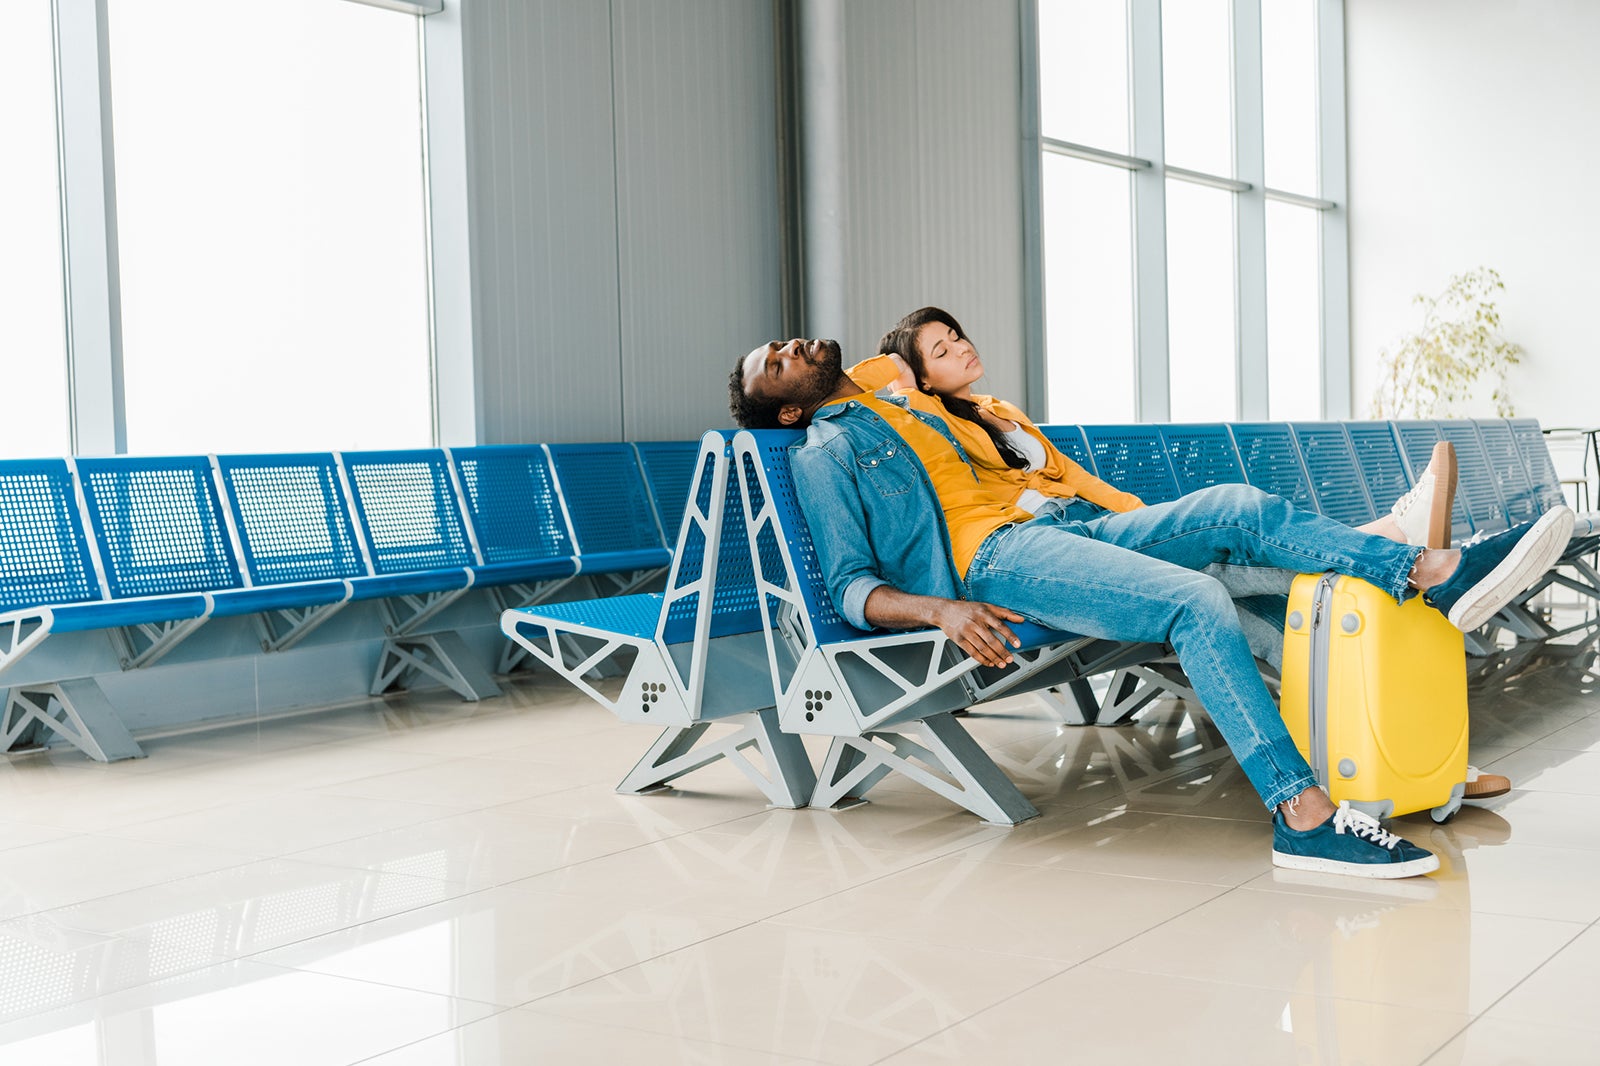 couple sleeping at airport